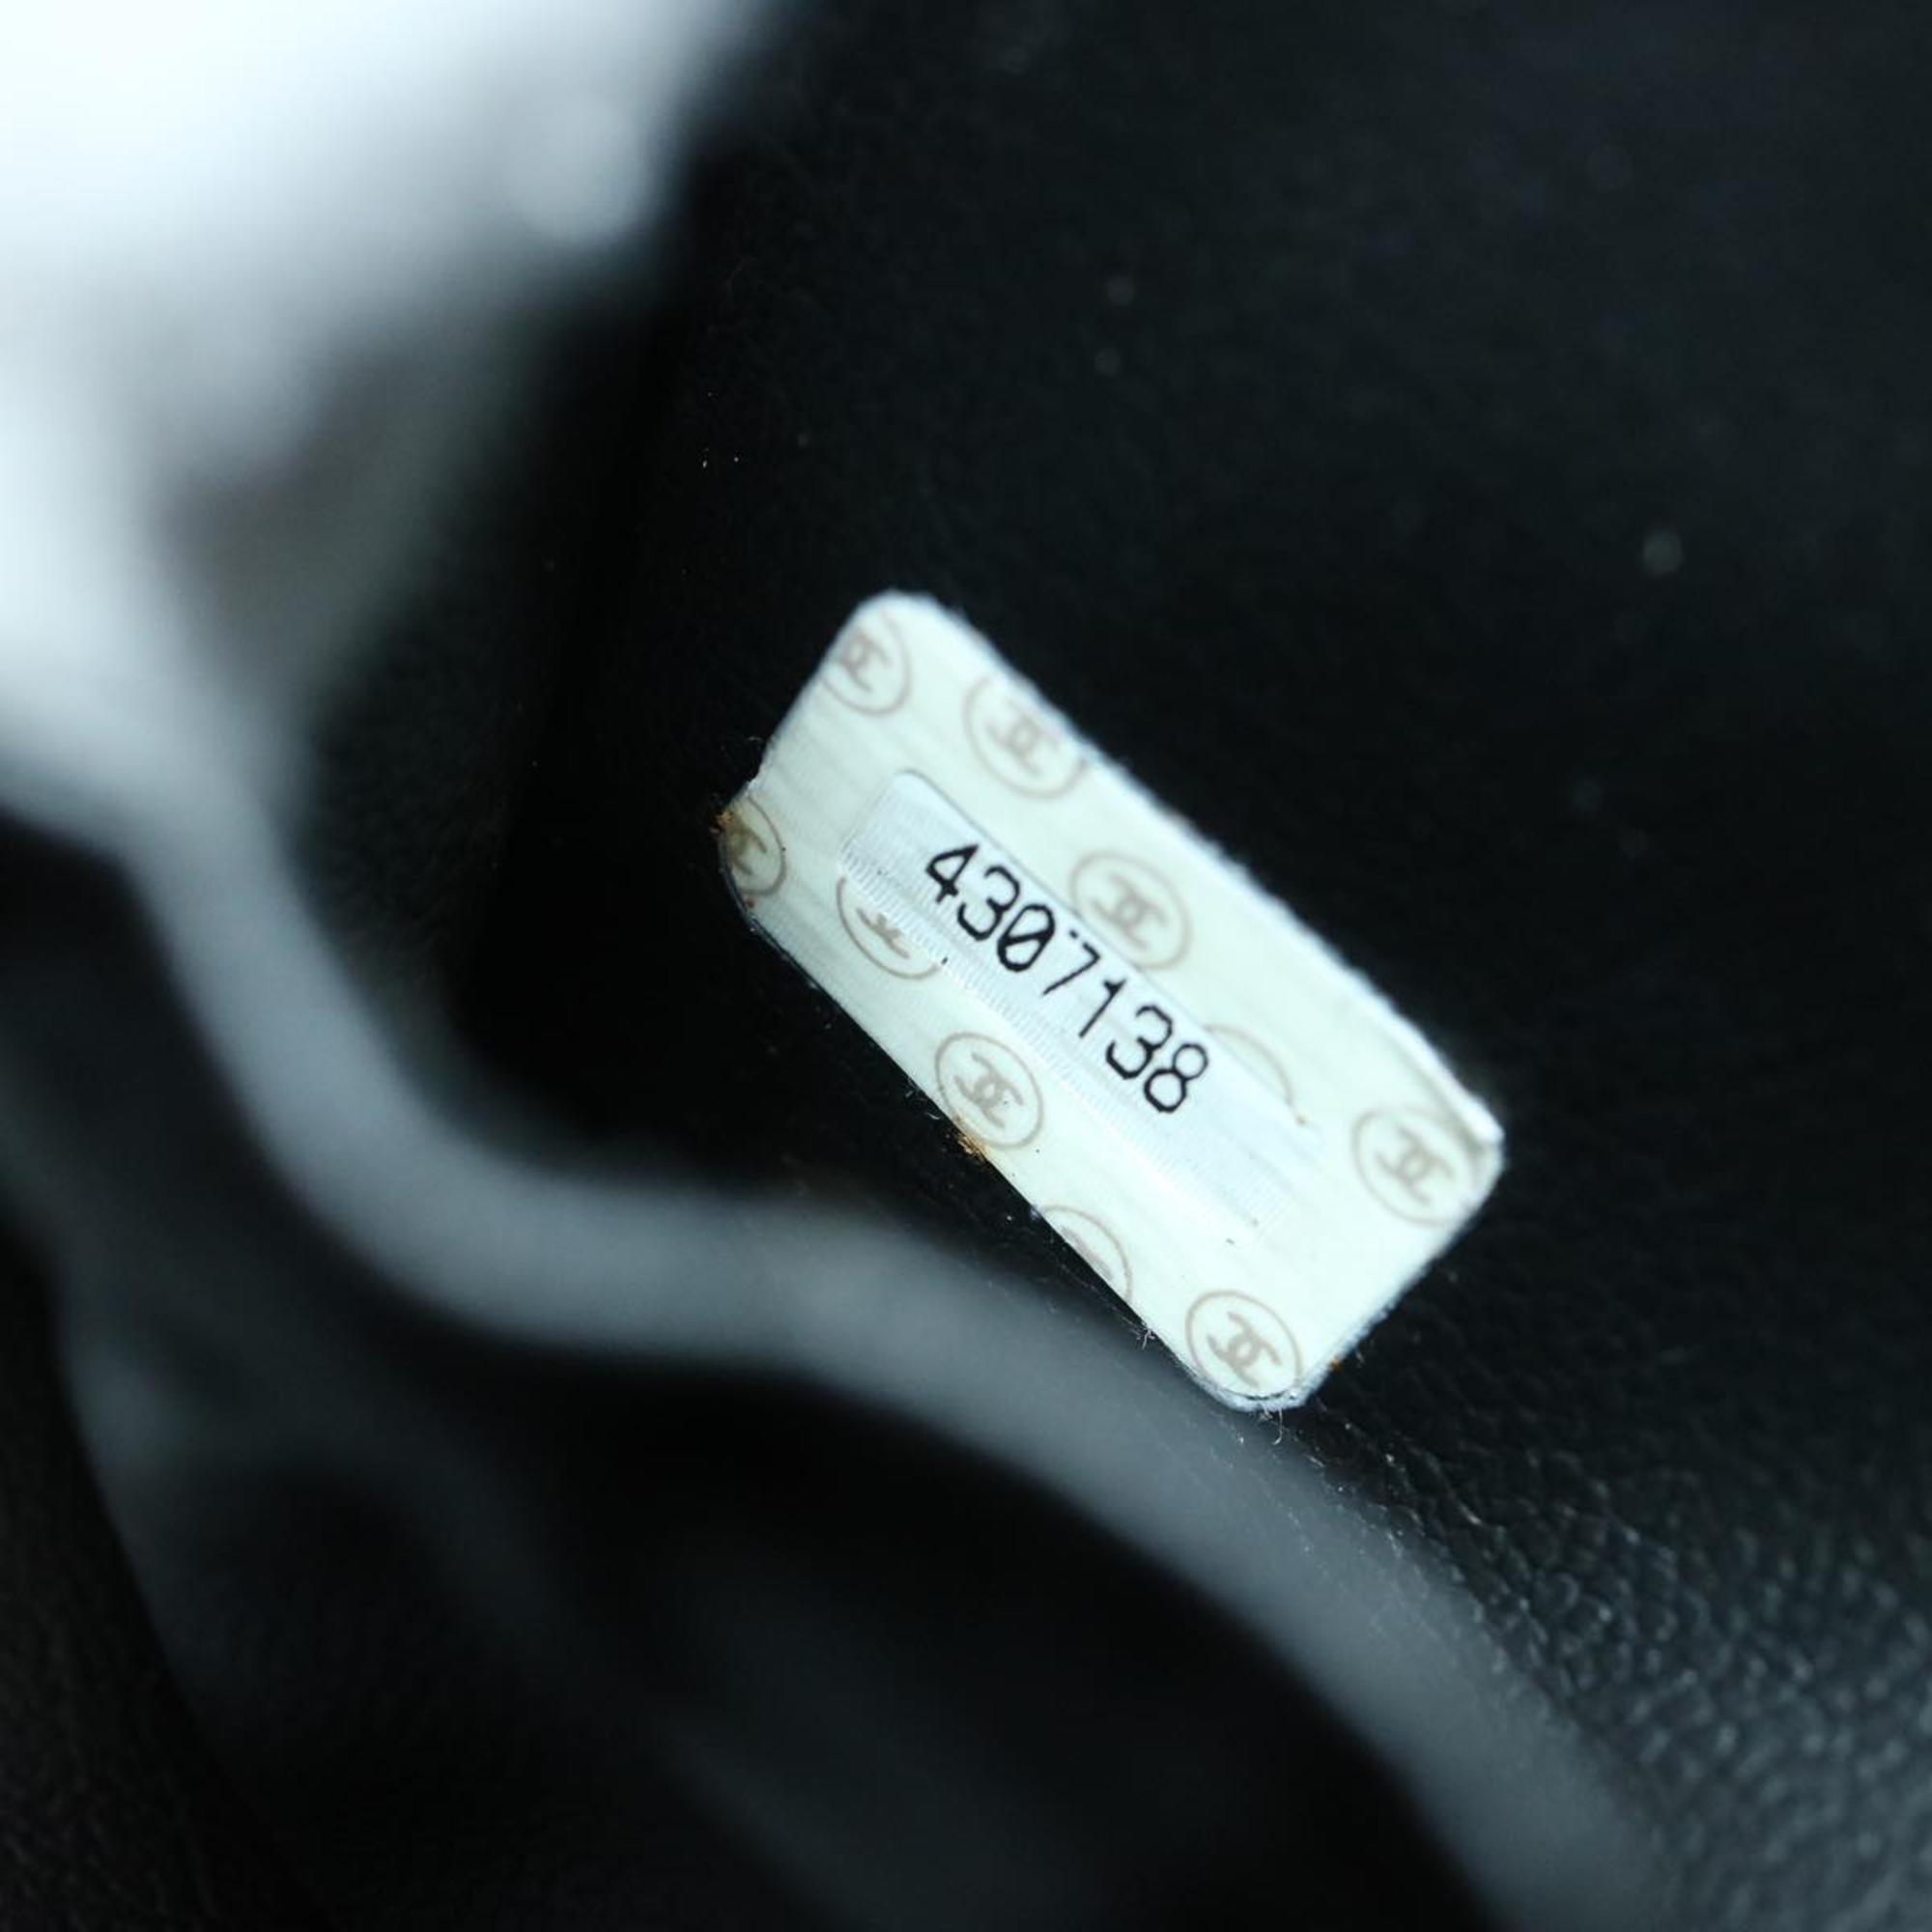 Chanel Black Leather CC Vanity Case